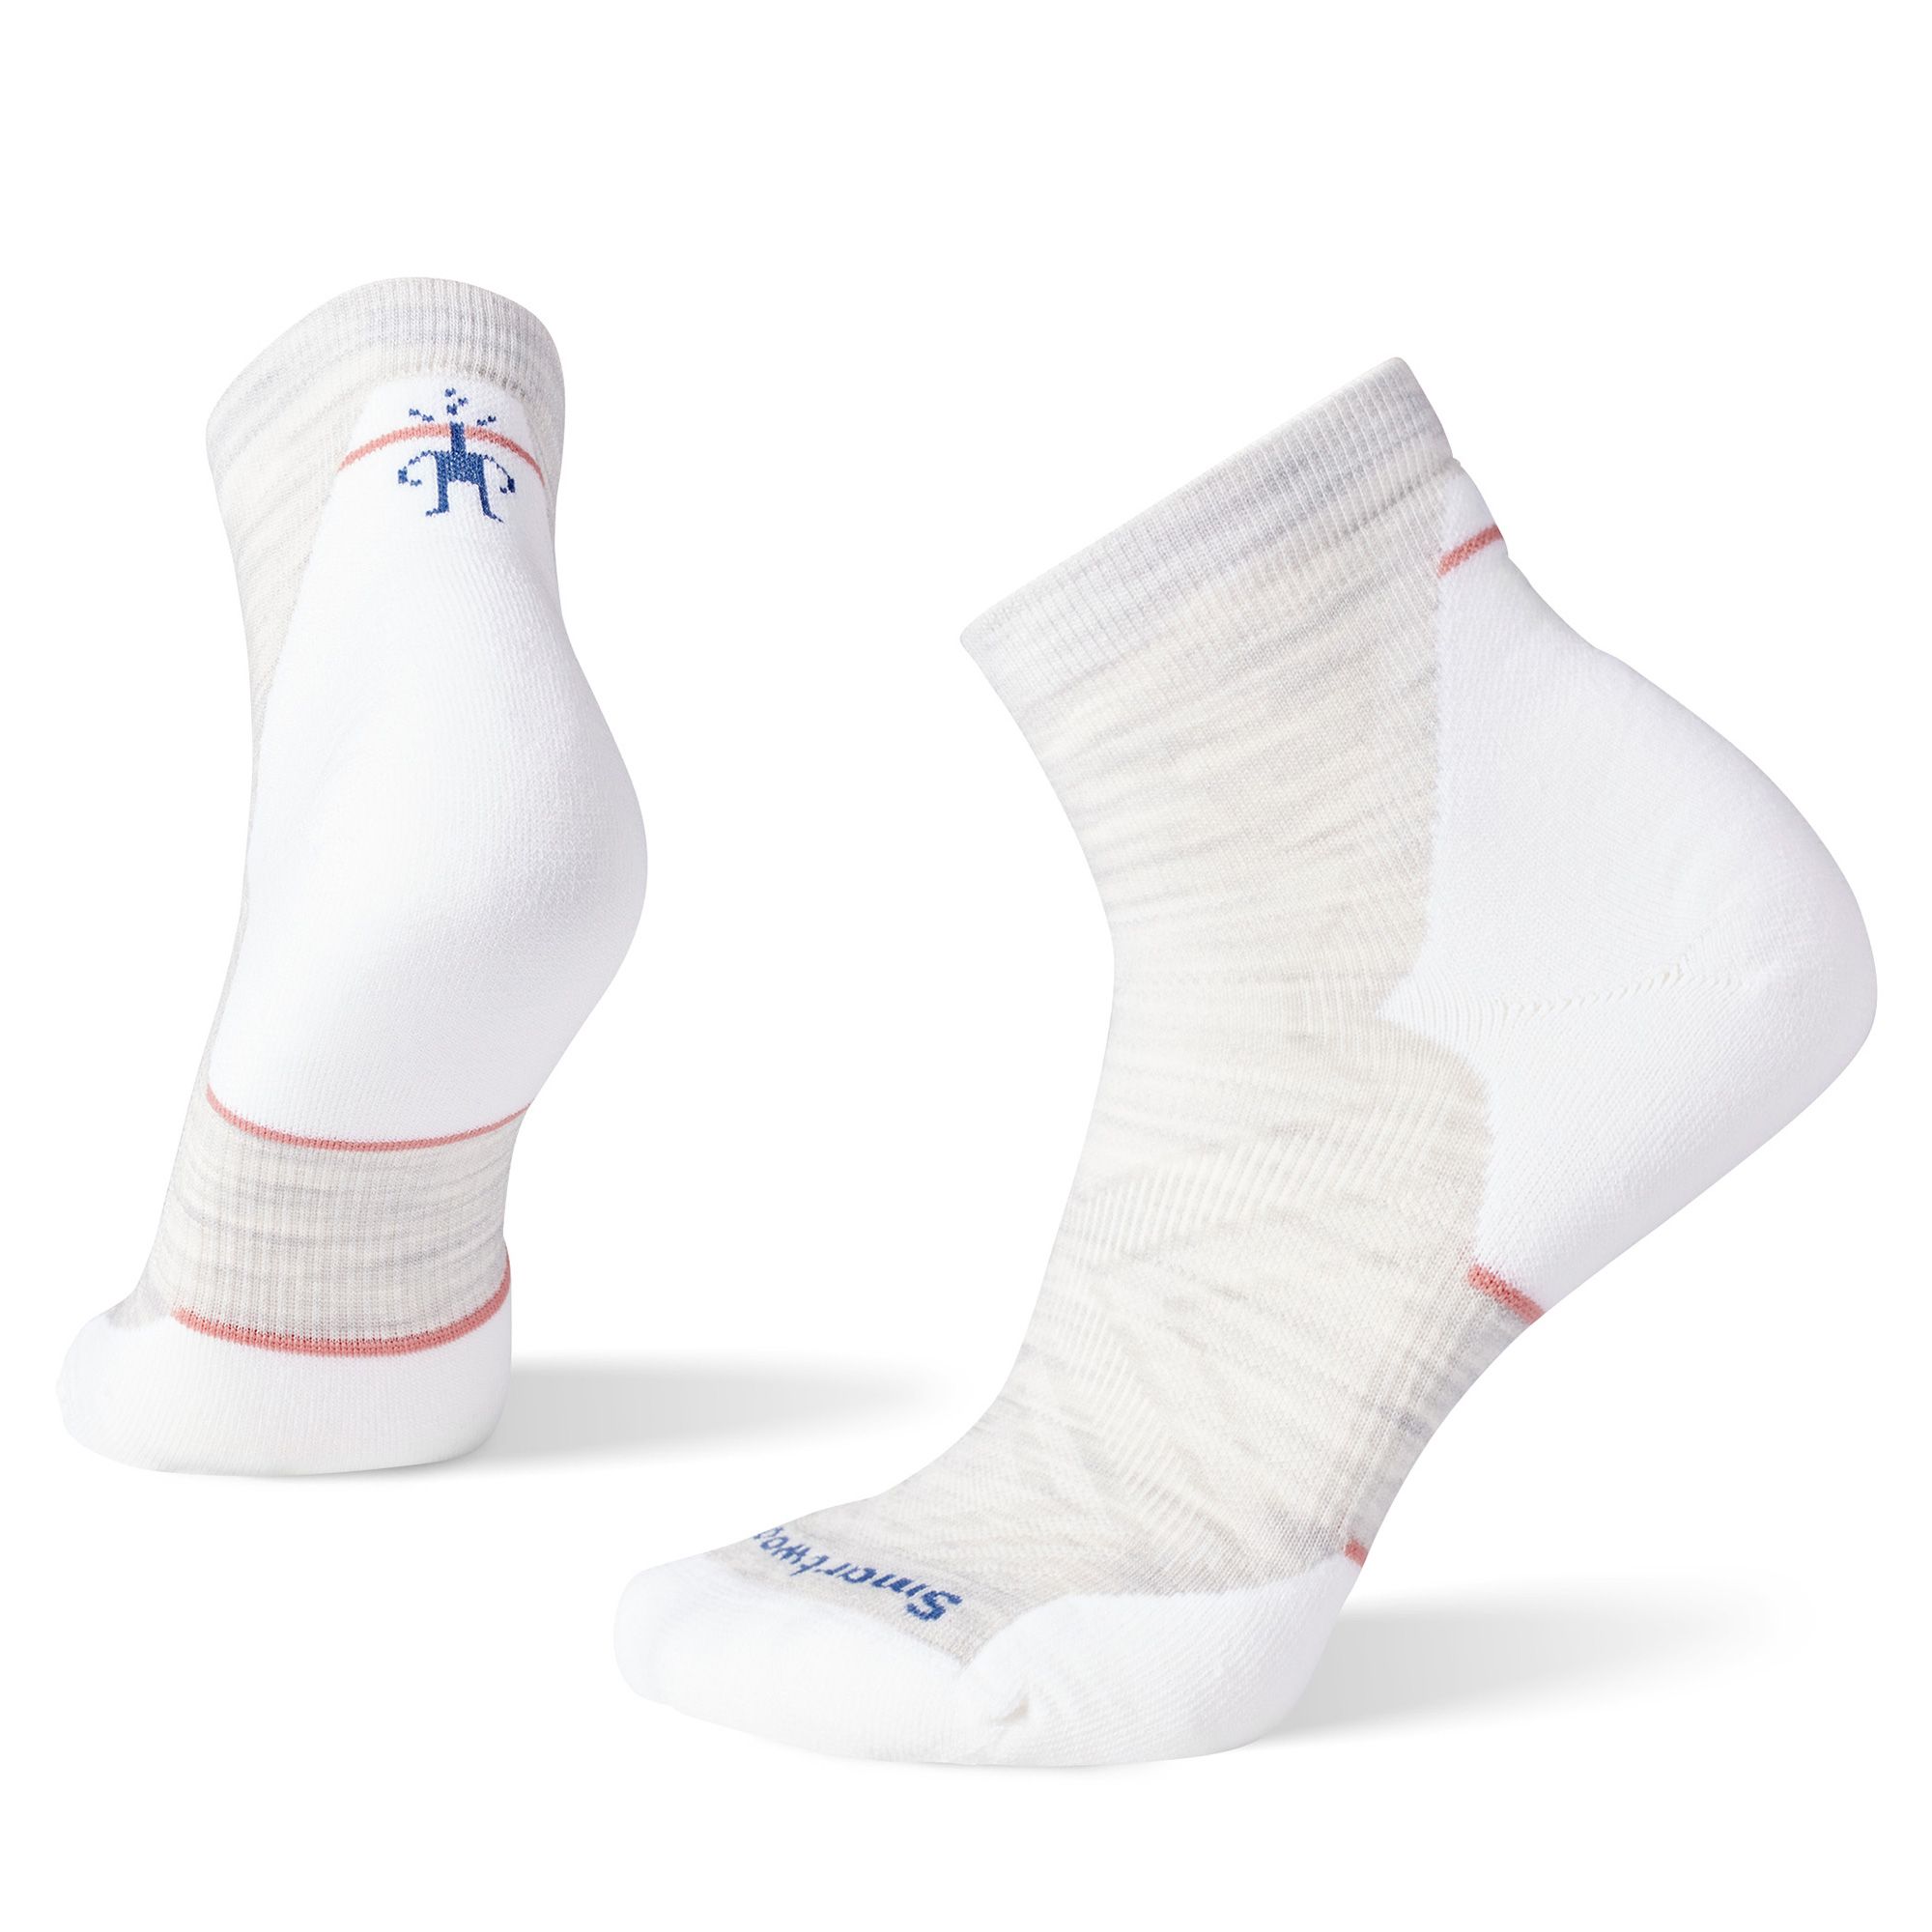  svlftecon Unisex Ankle Socks Thin Soft Athletic Low